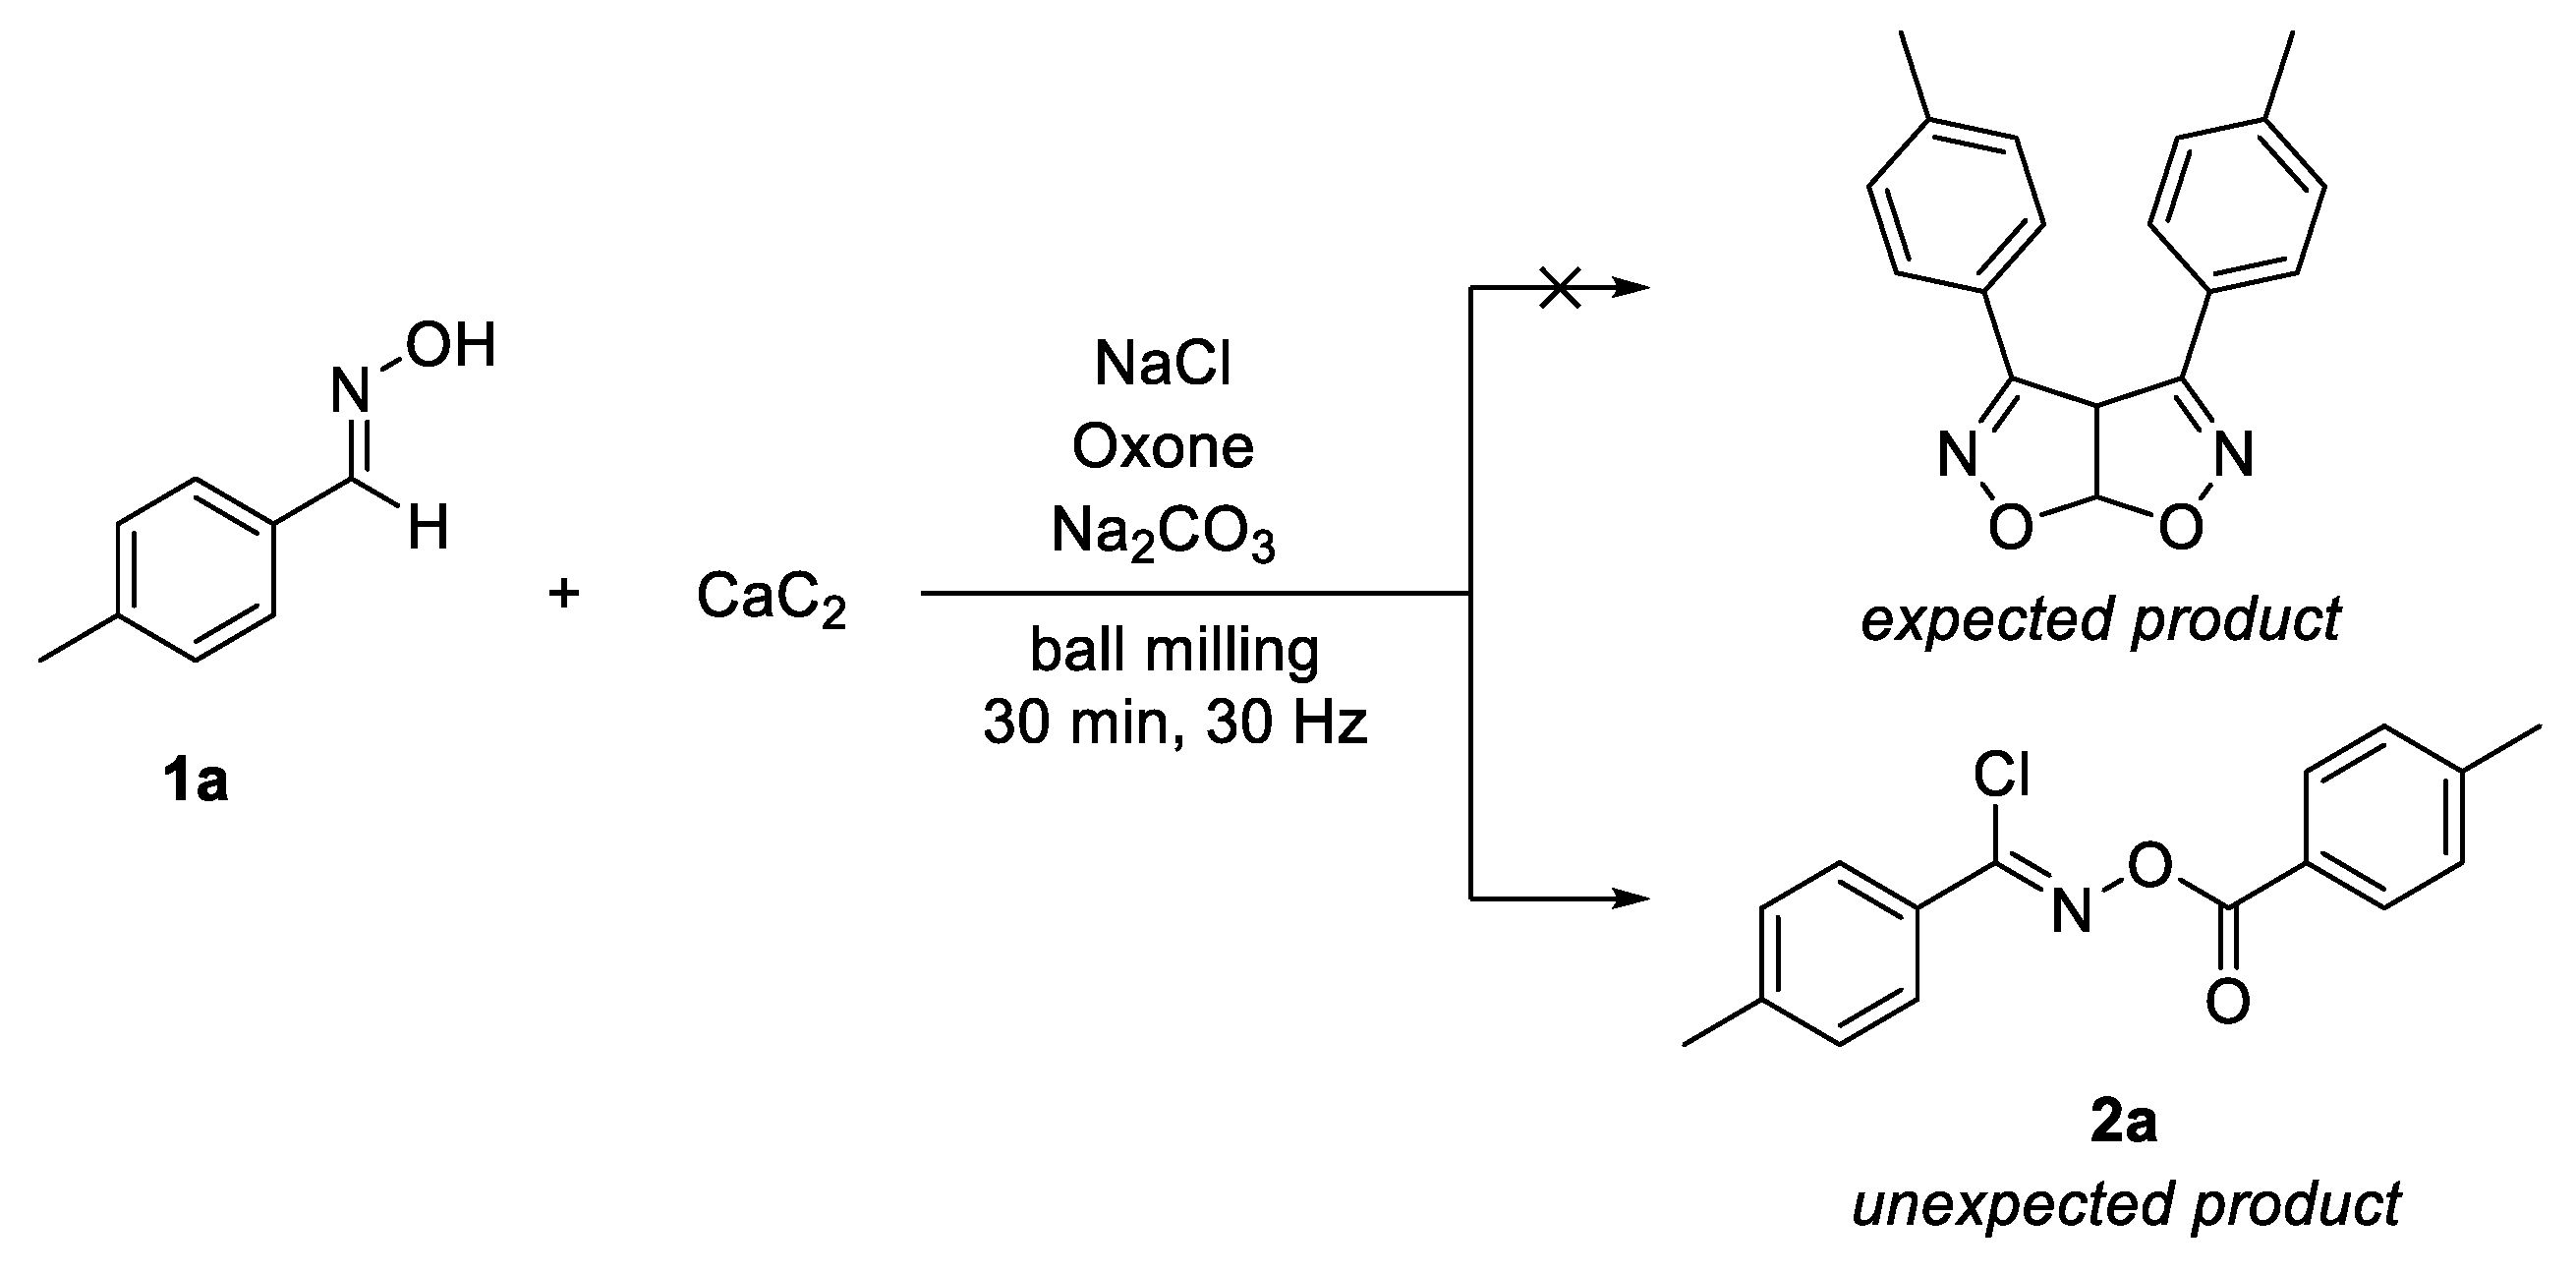 sodium chloride molecule structure